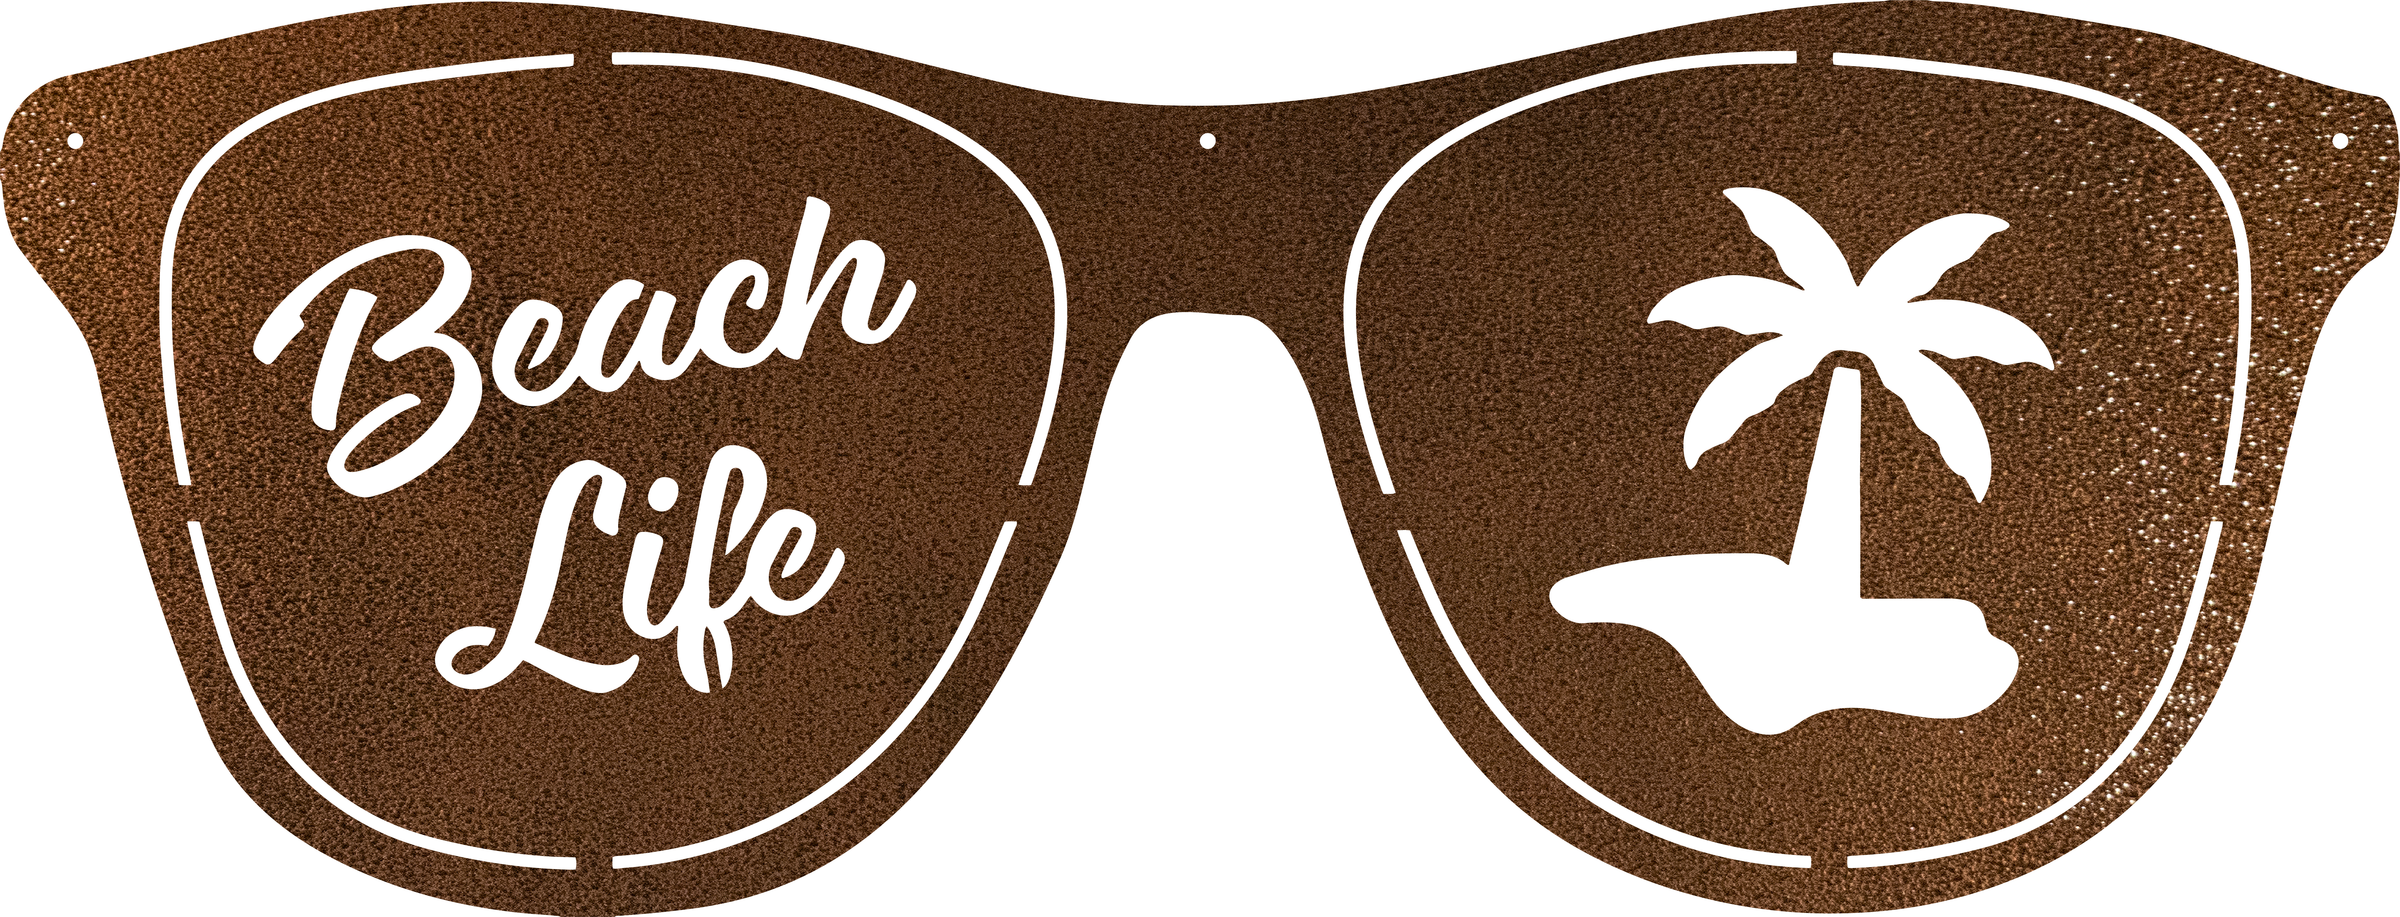 Beach Life Sunglasses